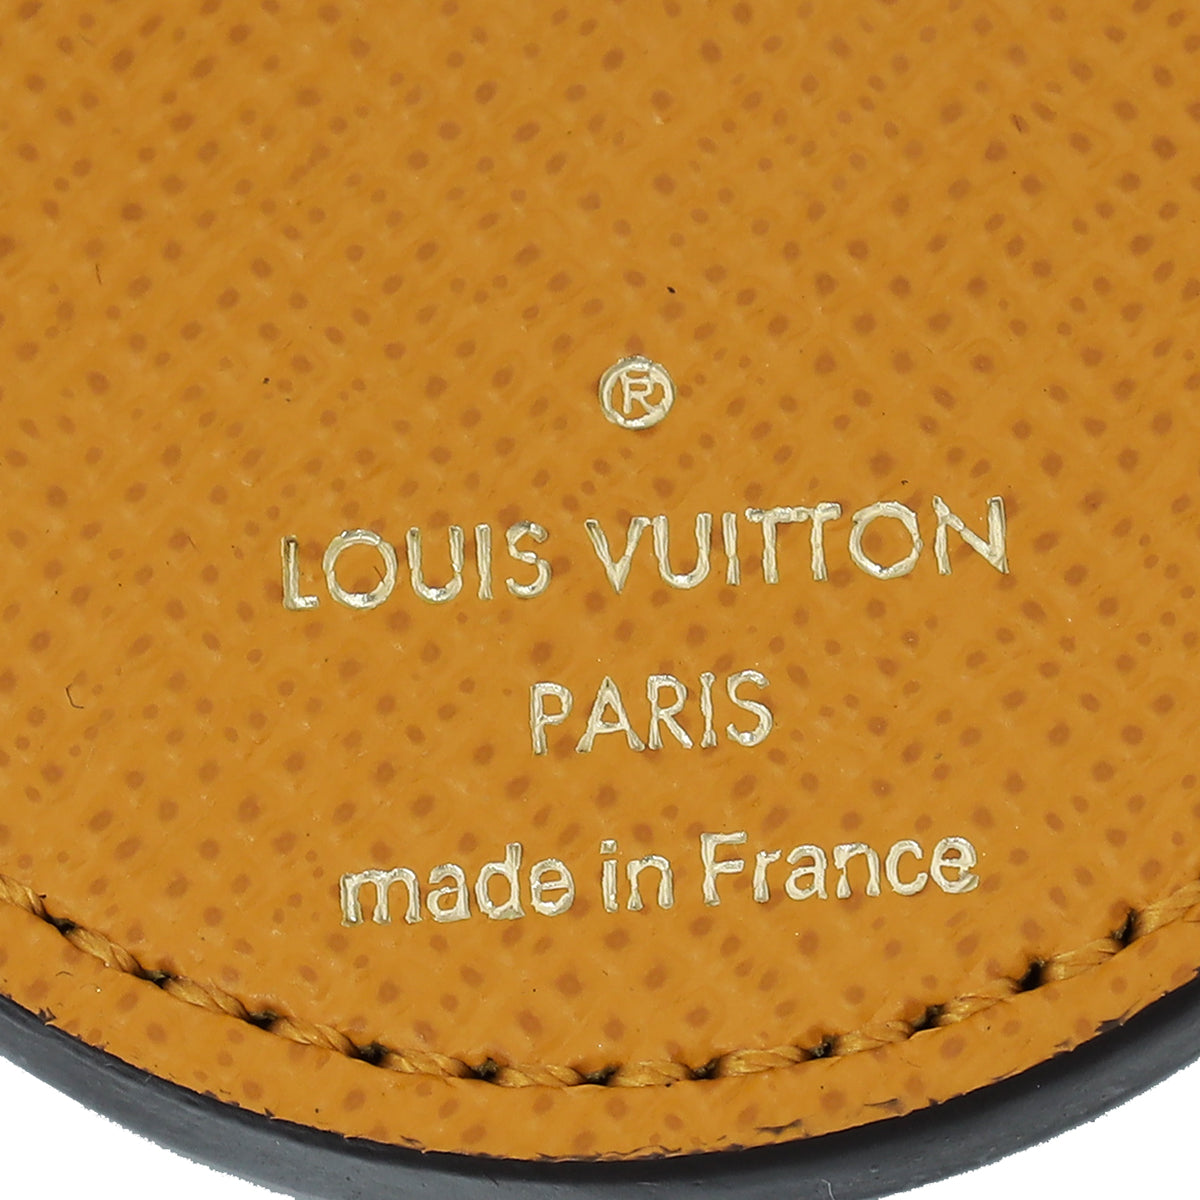 LOUIS VUITTON Giant Monogram JUNGLE Bag Charm/Key Holder SOLD OUT